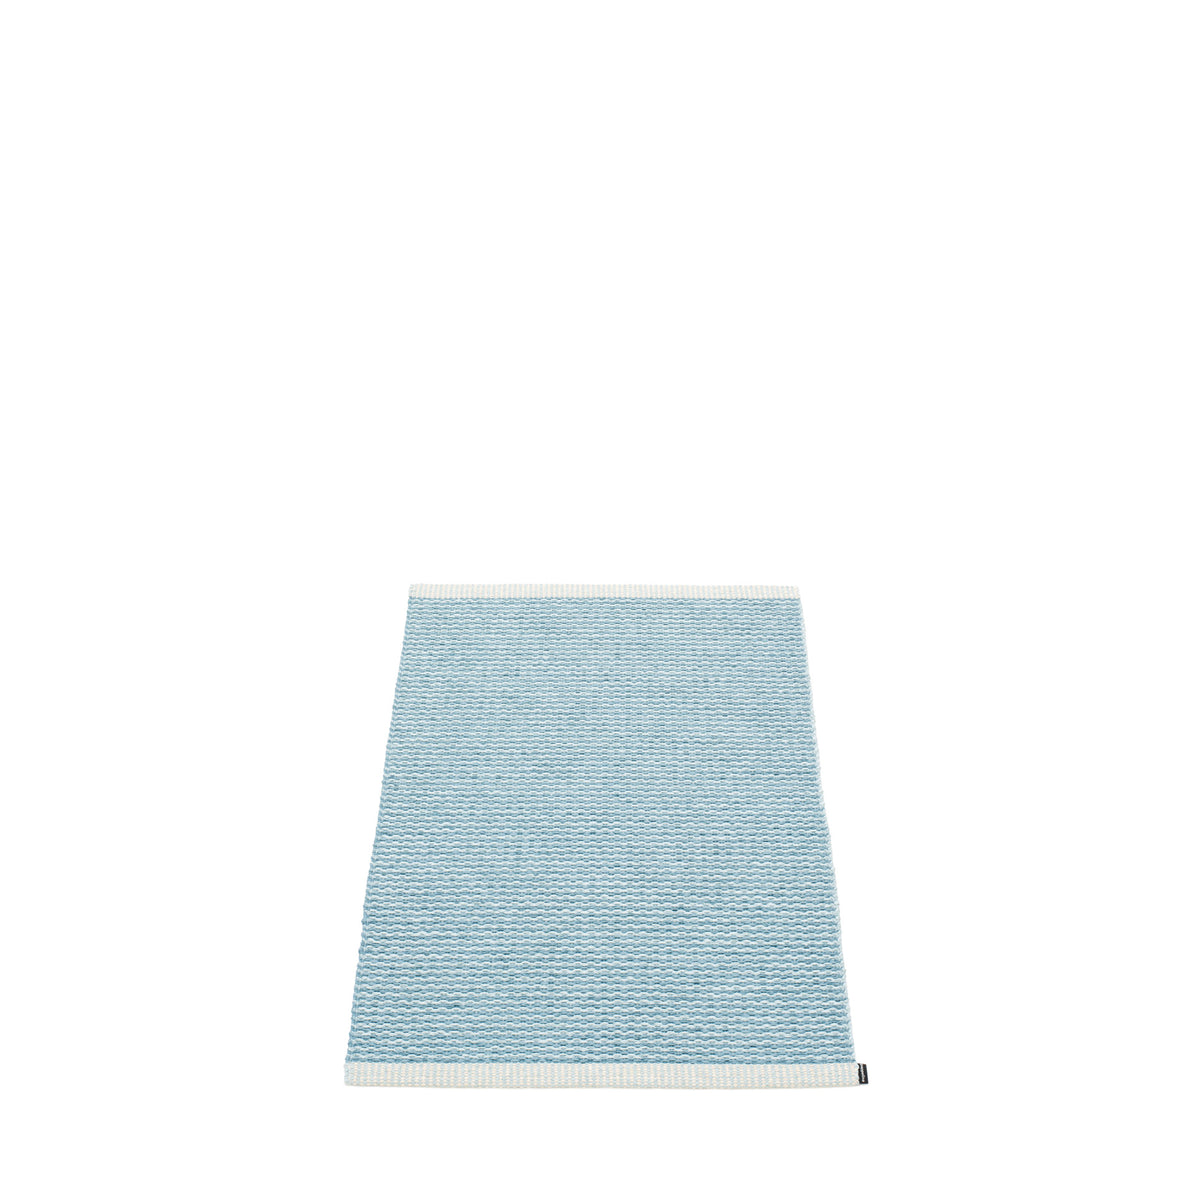 Pappelina | mono mat | misty ice blue - 60cm x 85cm